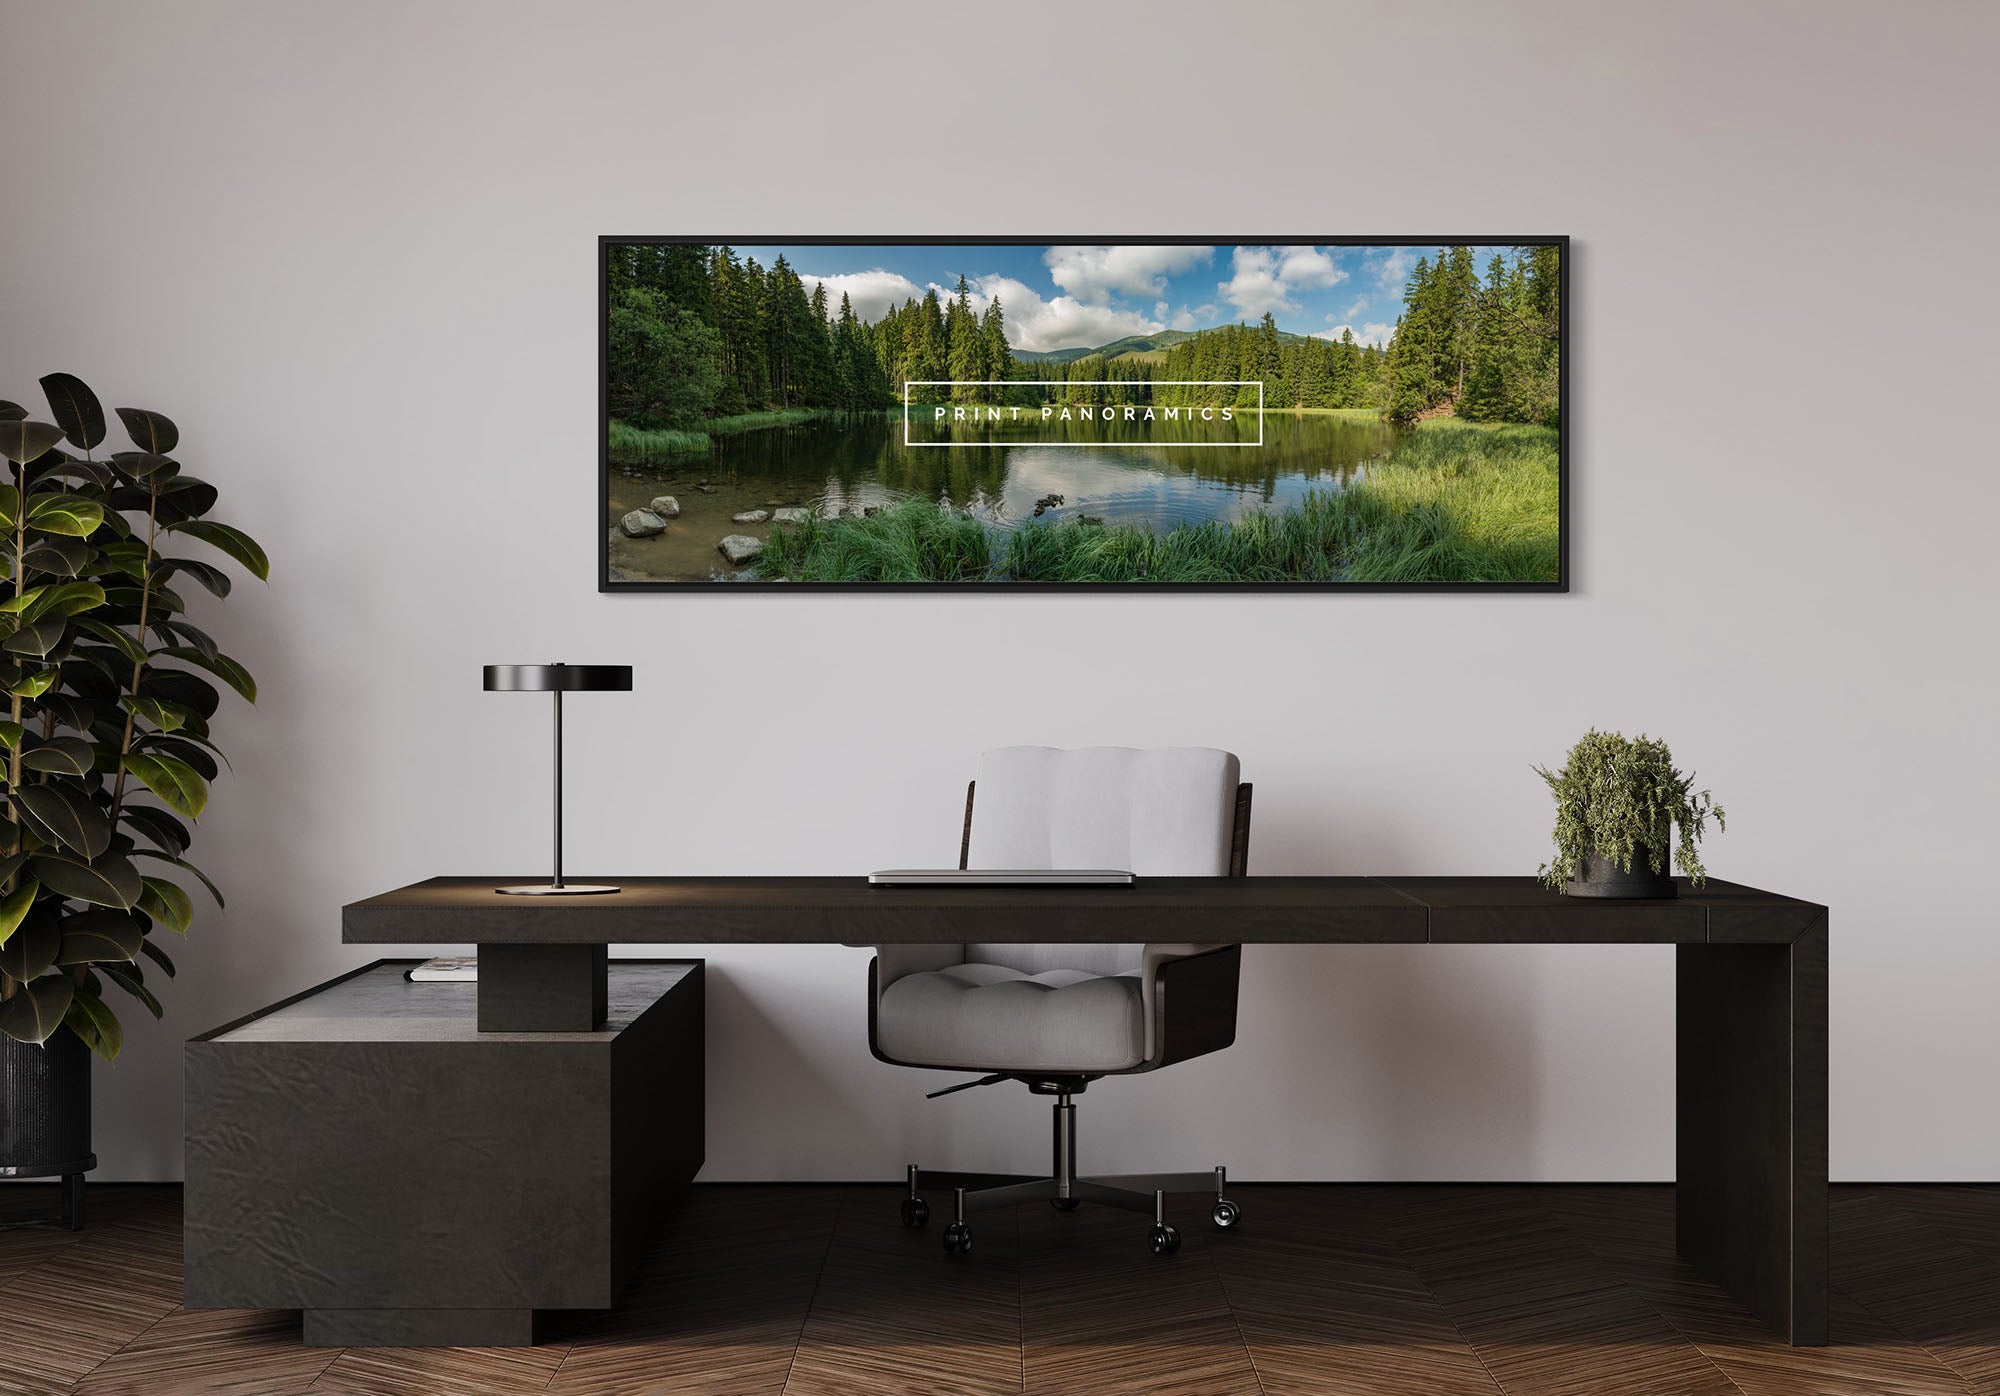 Office wall art - Print Panoramics